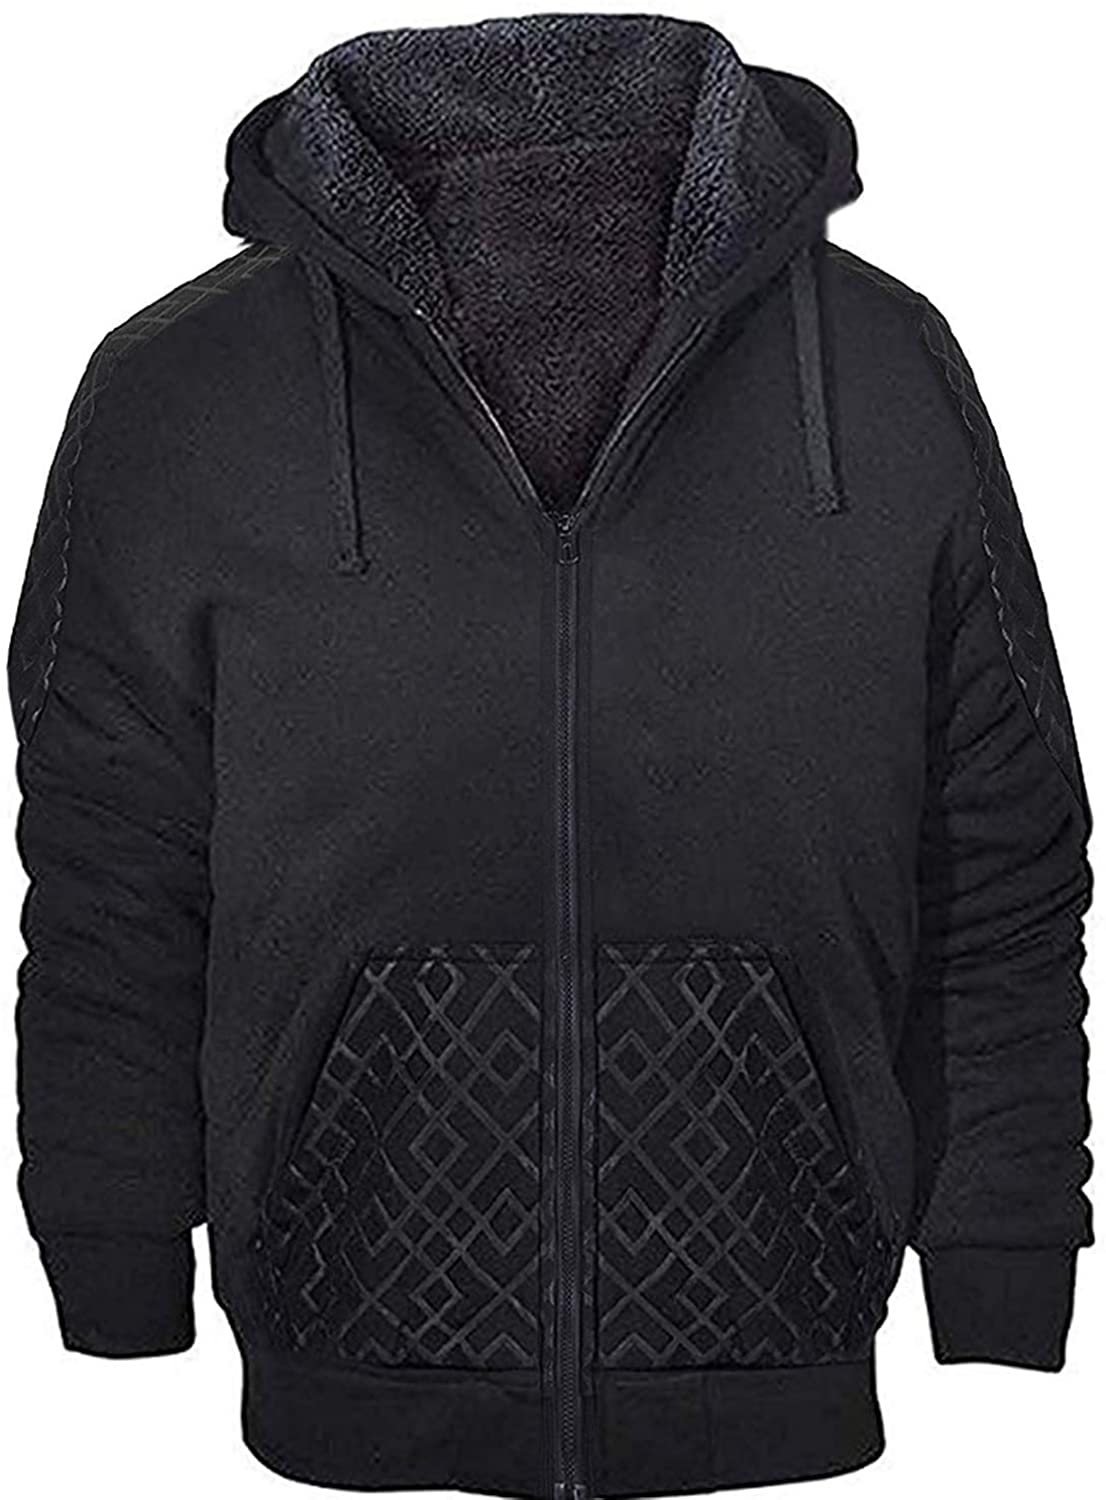 SWISSWELL Fleece Hoodie Men Zip Up Soft Sport Hooded Sweatshirt Black Stitching-Large 